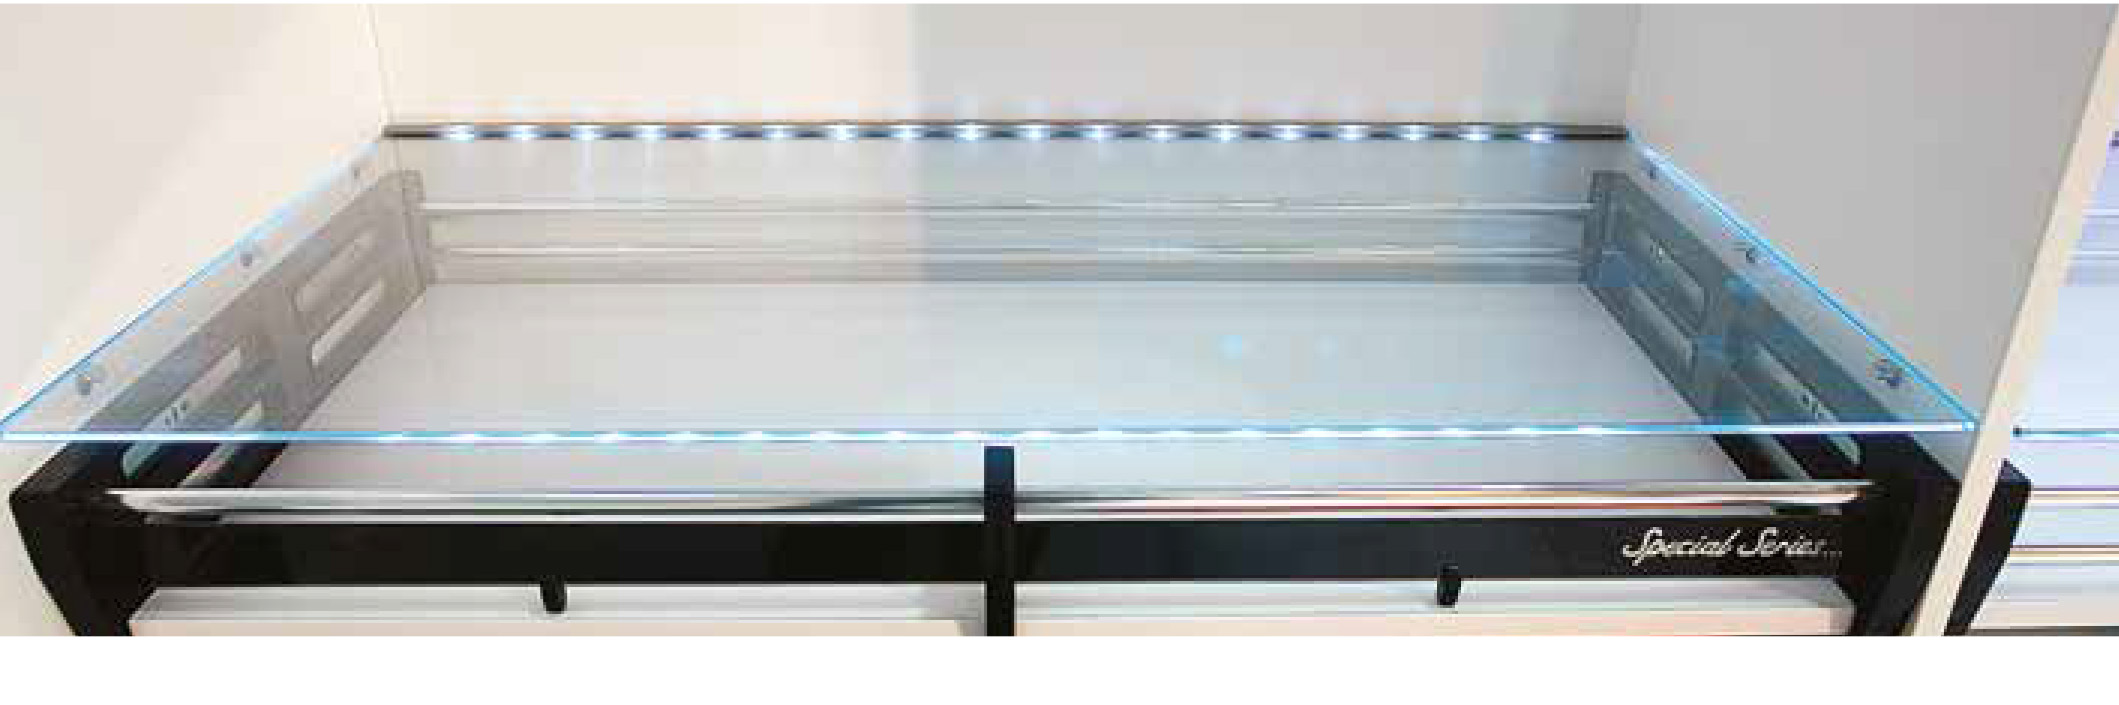 02.007.01 ( Aluminium Glass Led Lighting )